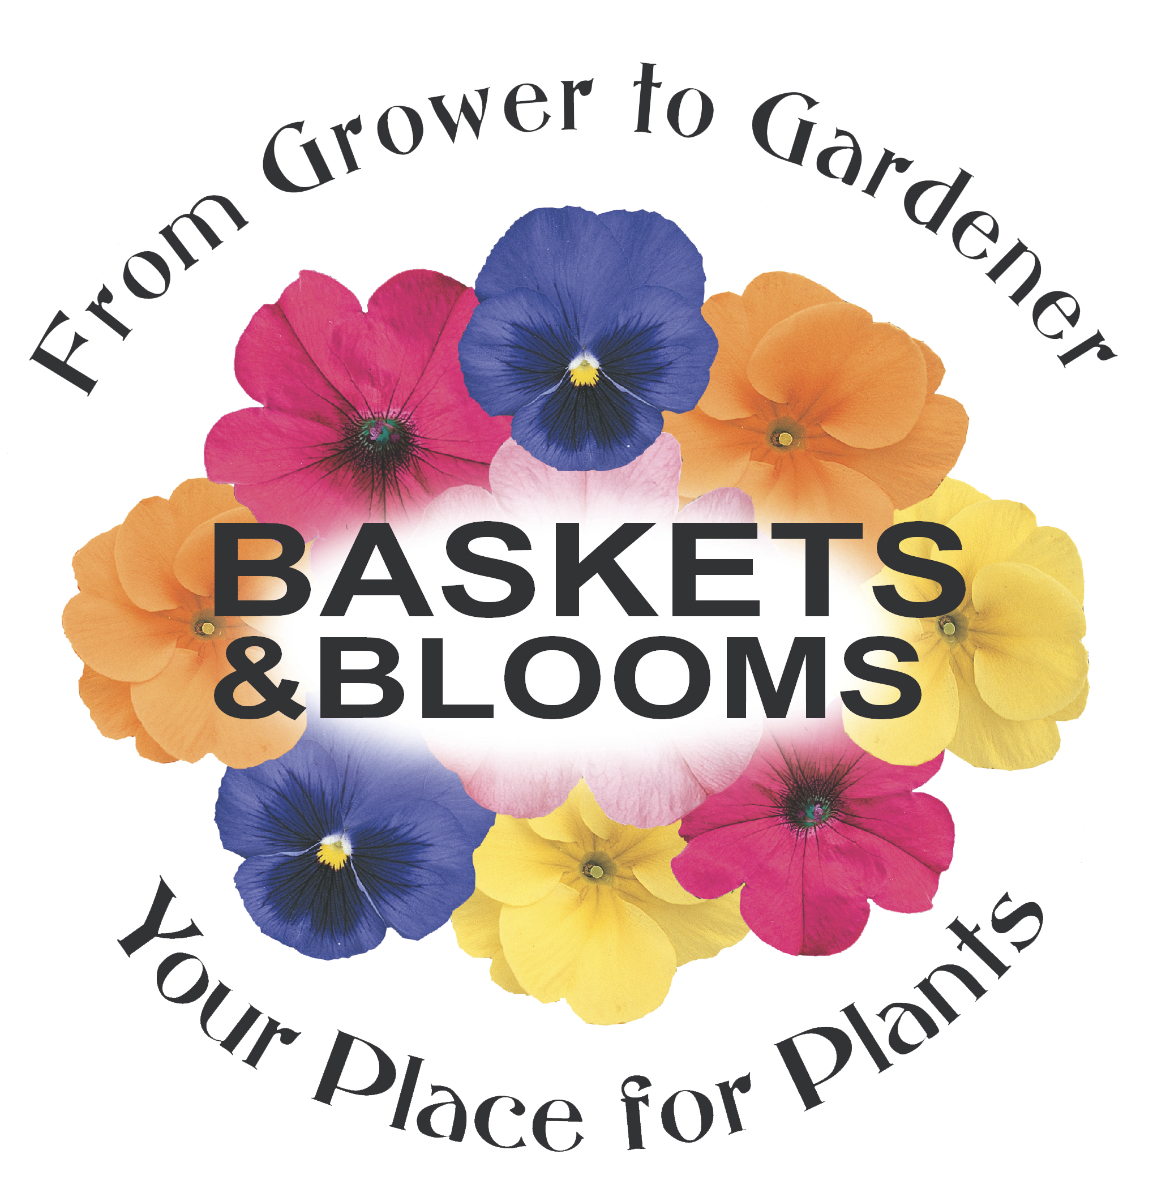 Baskets & Blooms